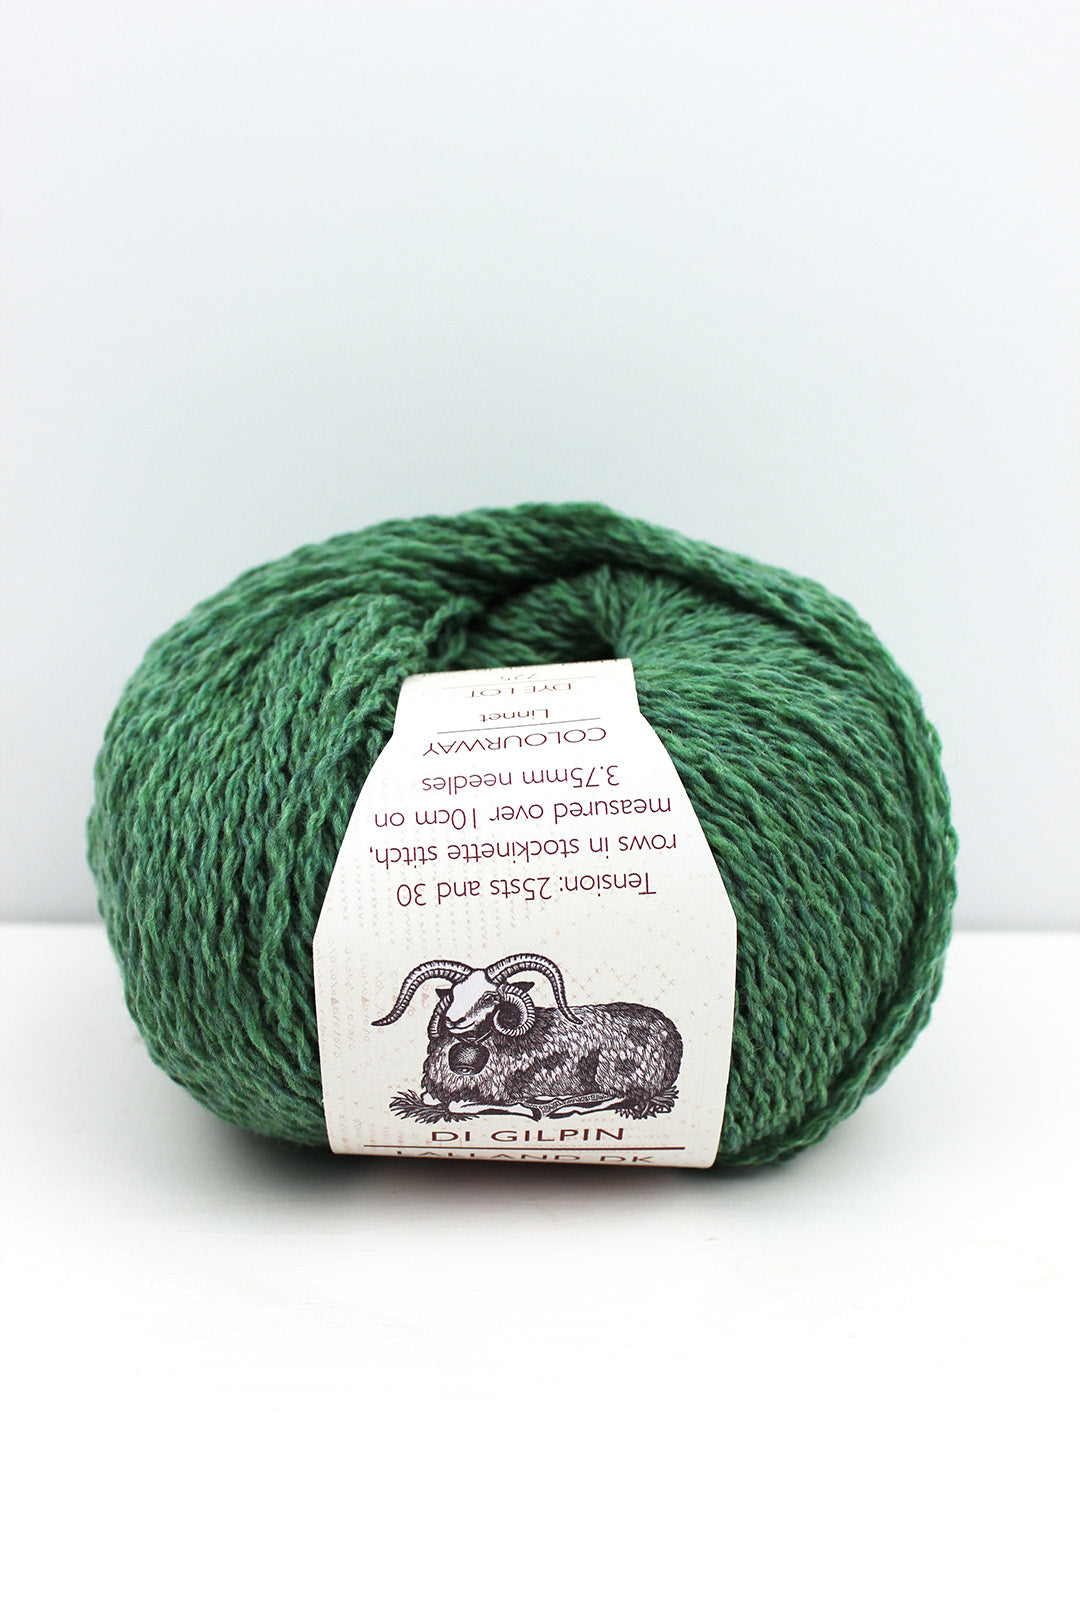 Di Gilpin yarn in green Linnet colourway. Scottish Textiles Showcase